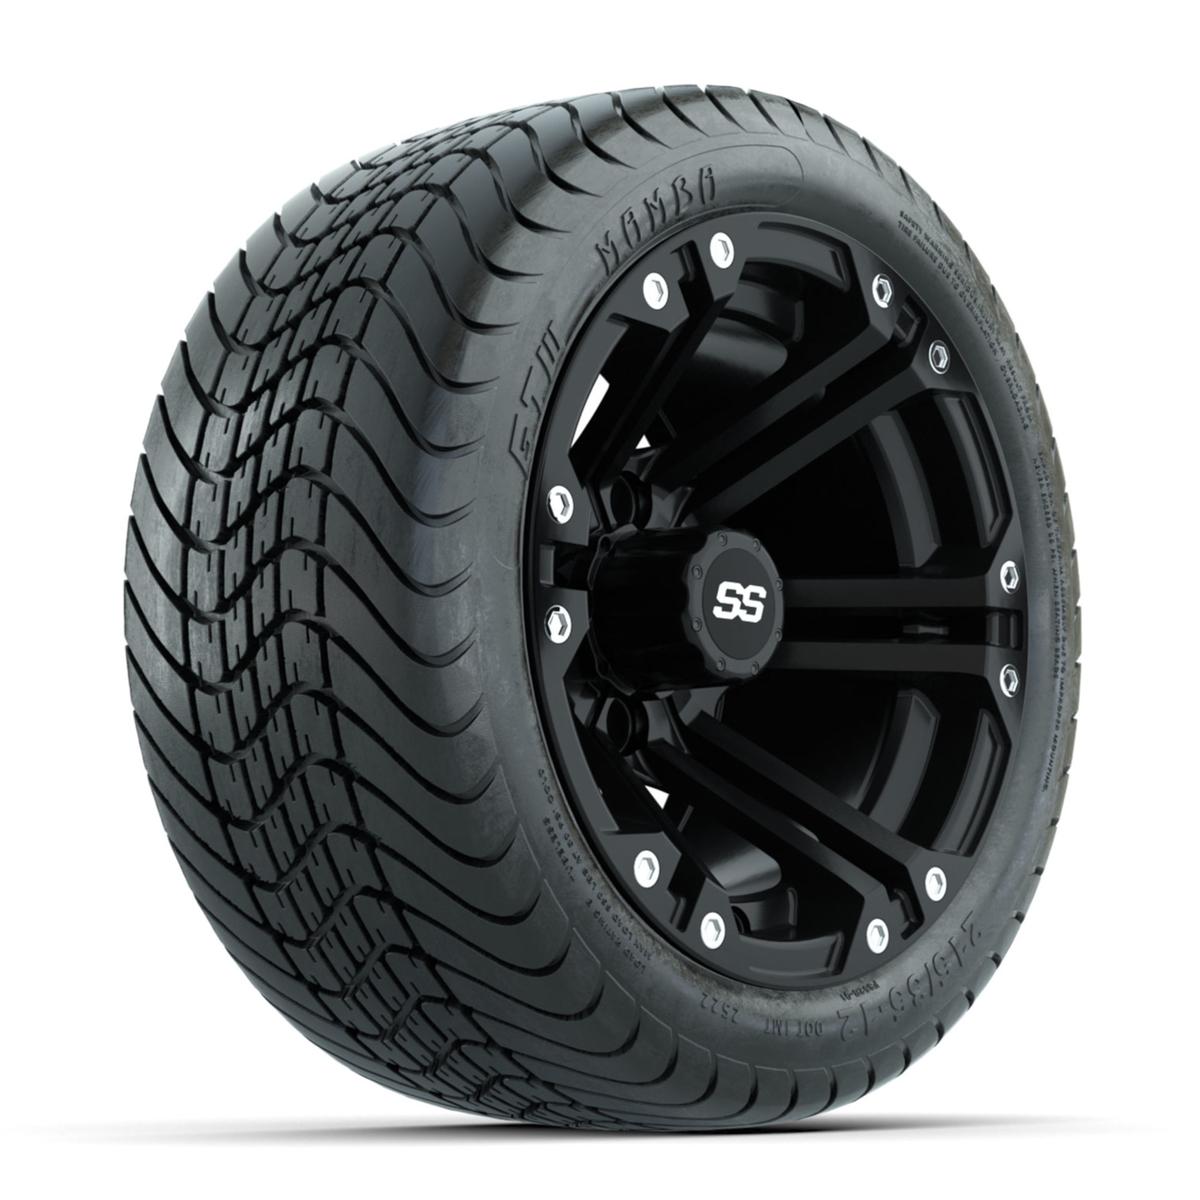 GTW Specter Matte Black 12 in Wheels with 215/35-12 Mamba Street Tires – Full Set